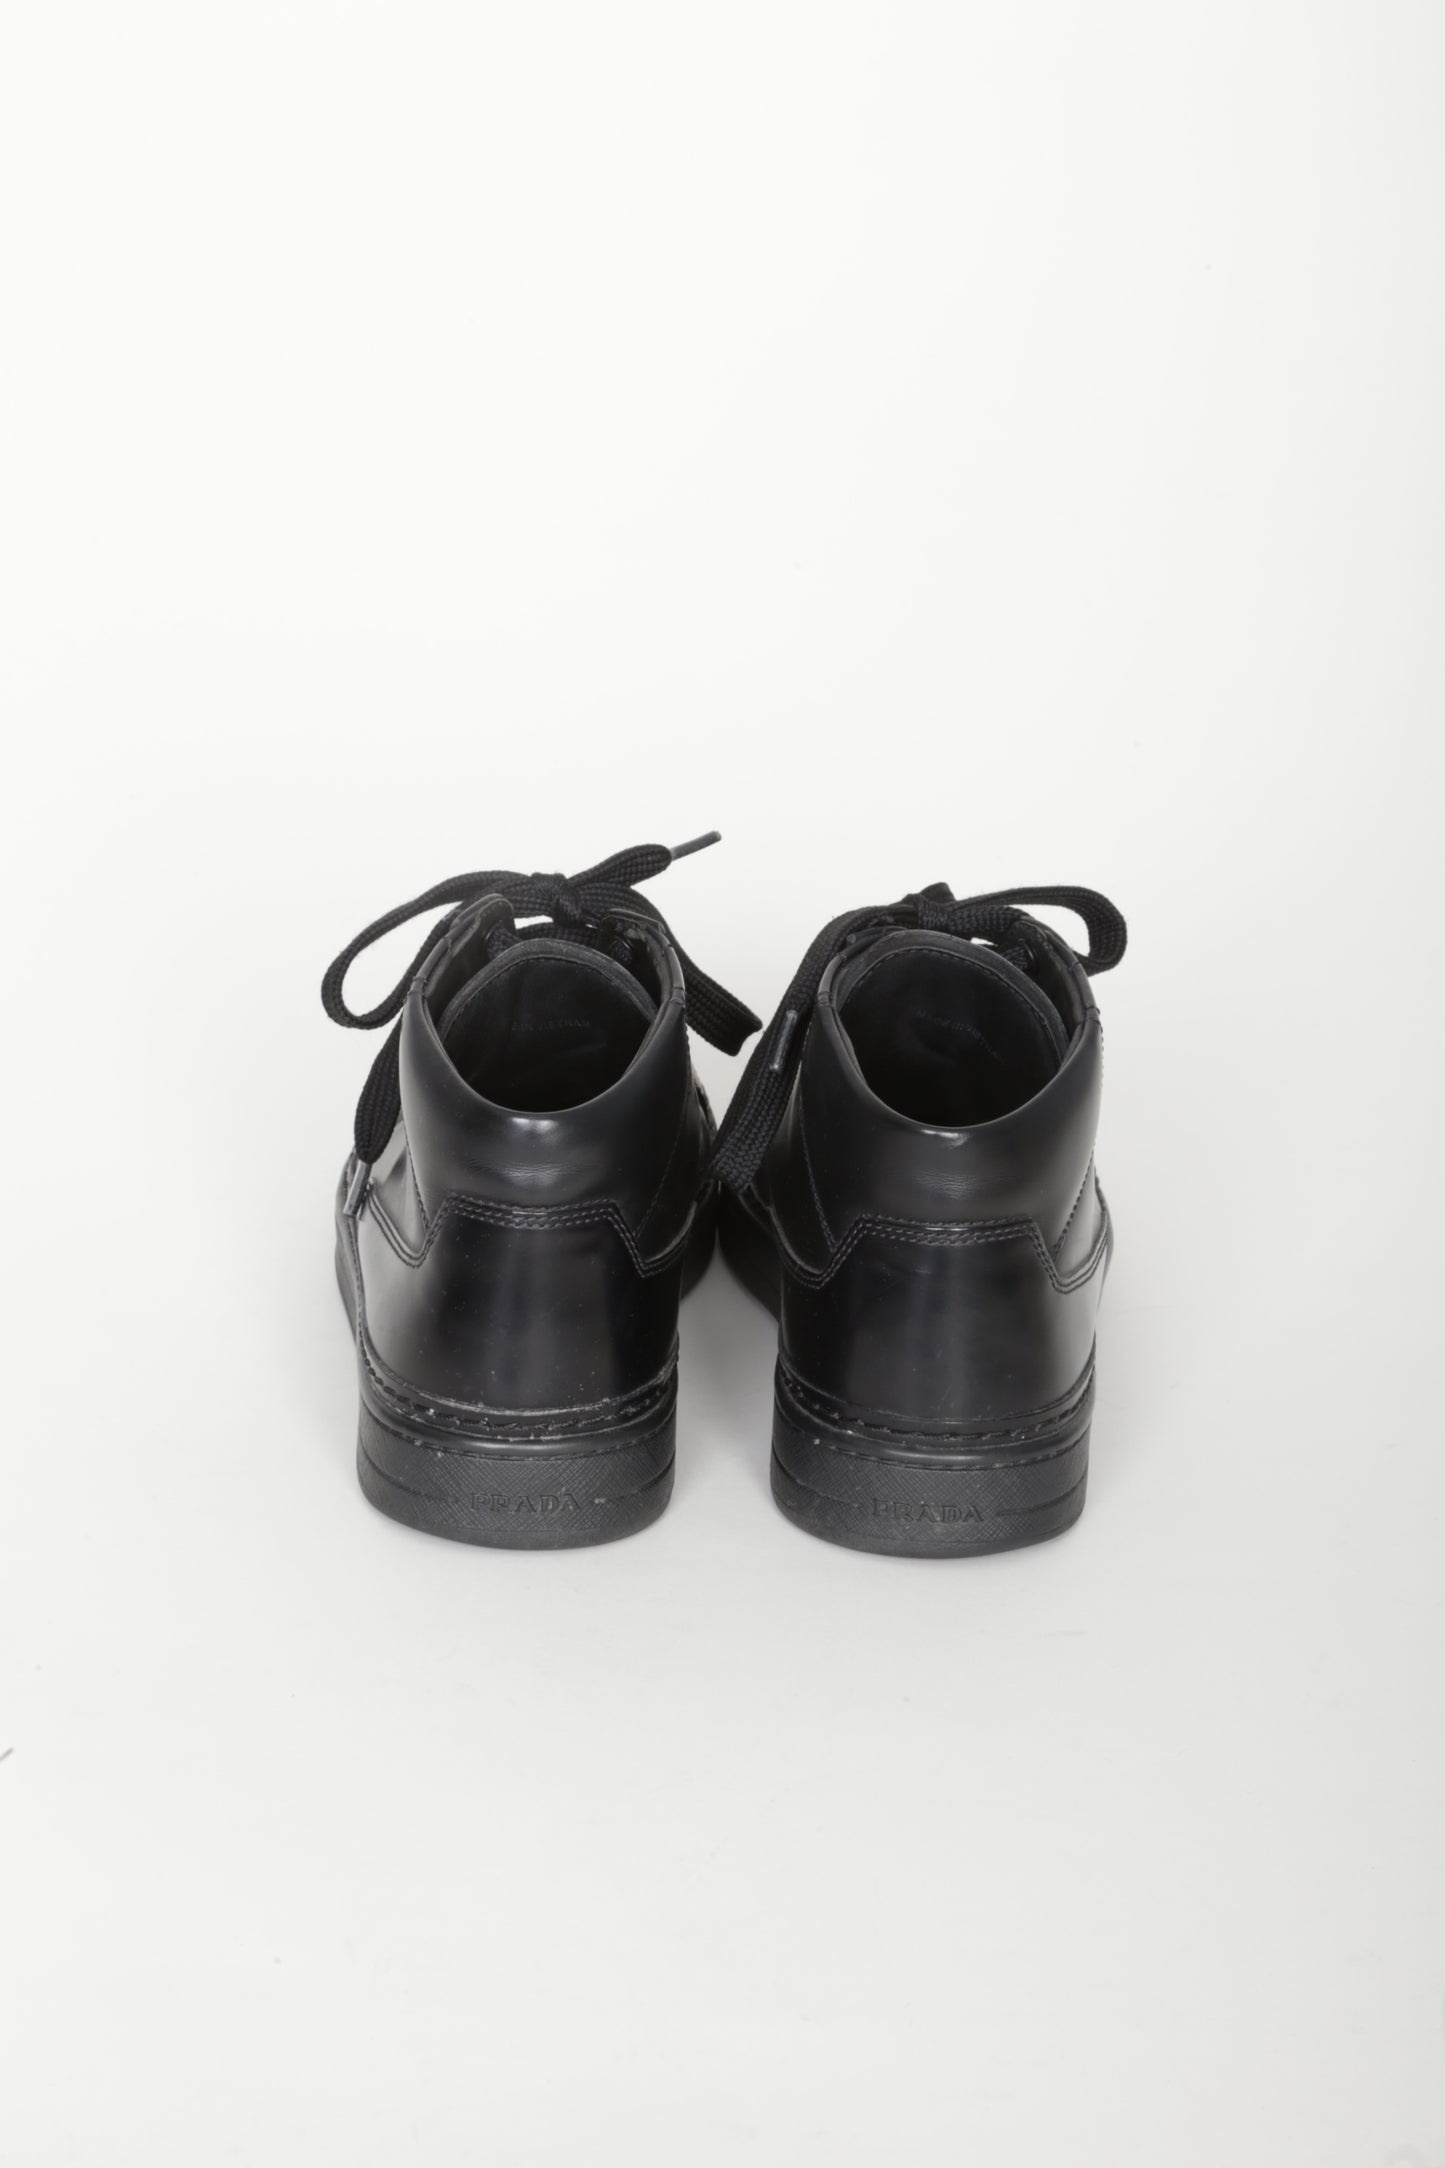 Prada Mens Black Shoes Size N/S